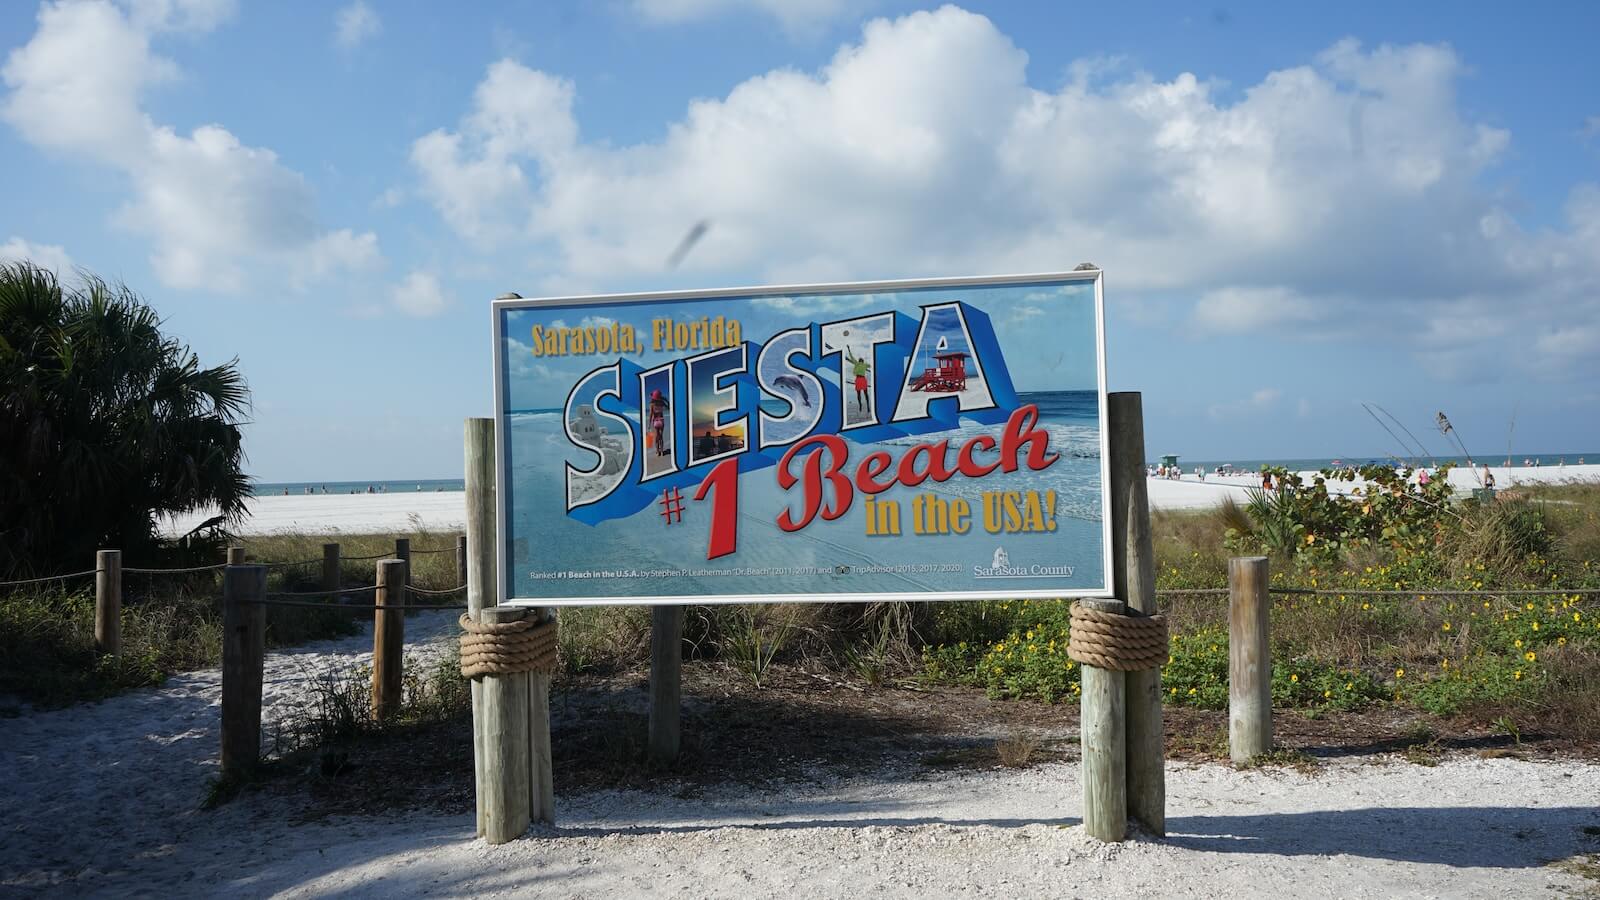 a sign for a restaurant on the beach